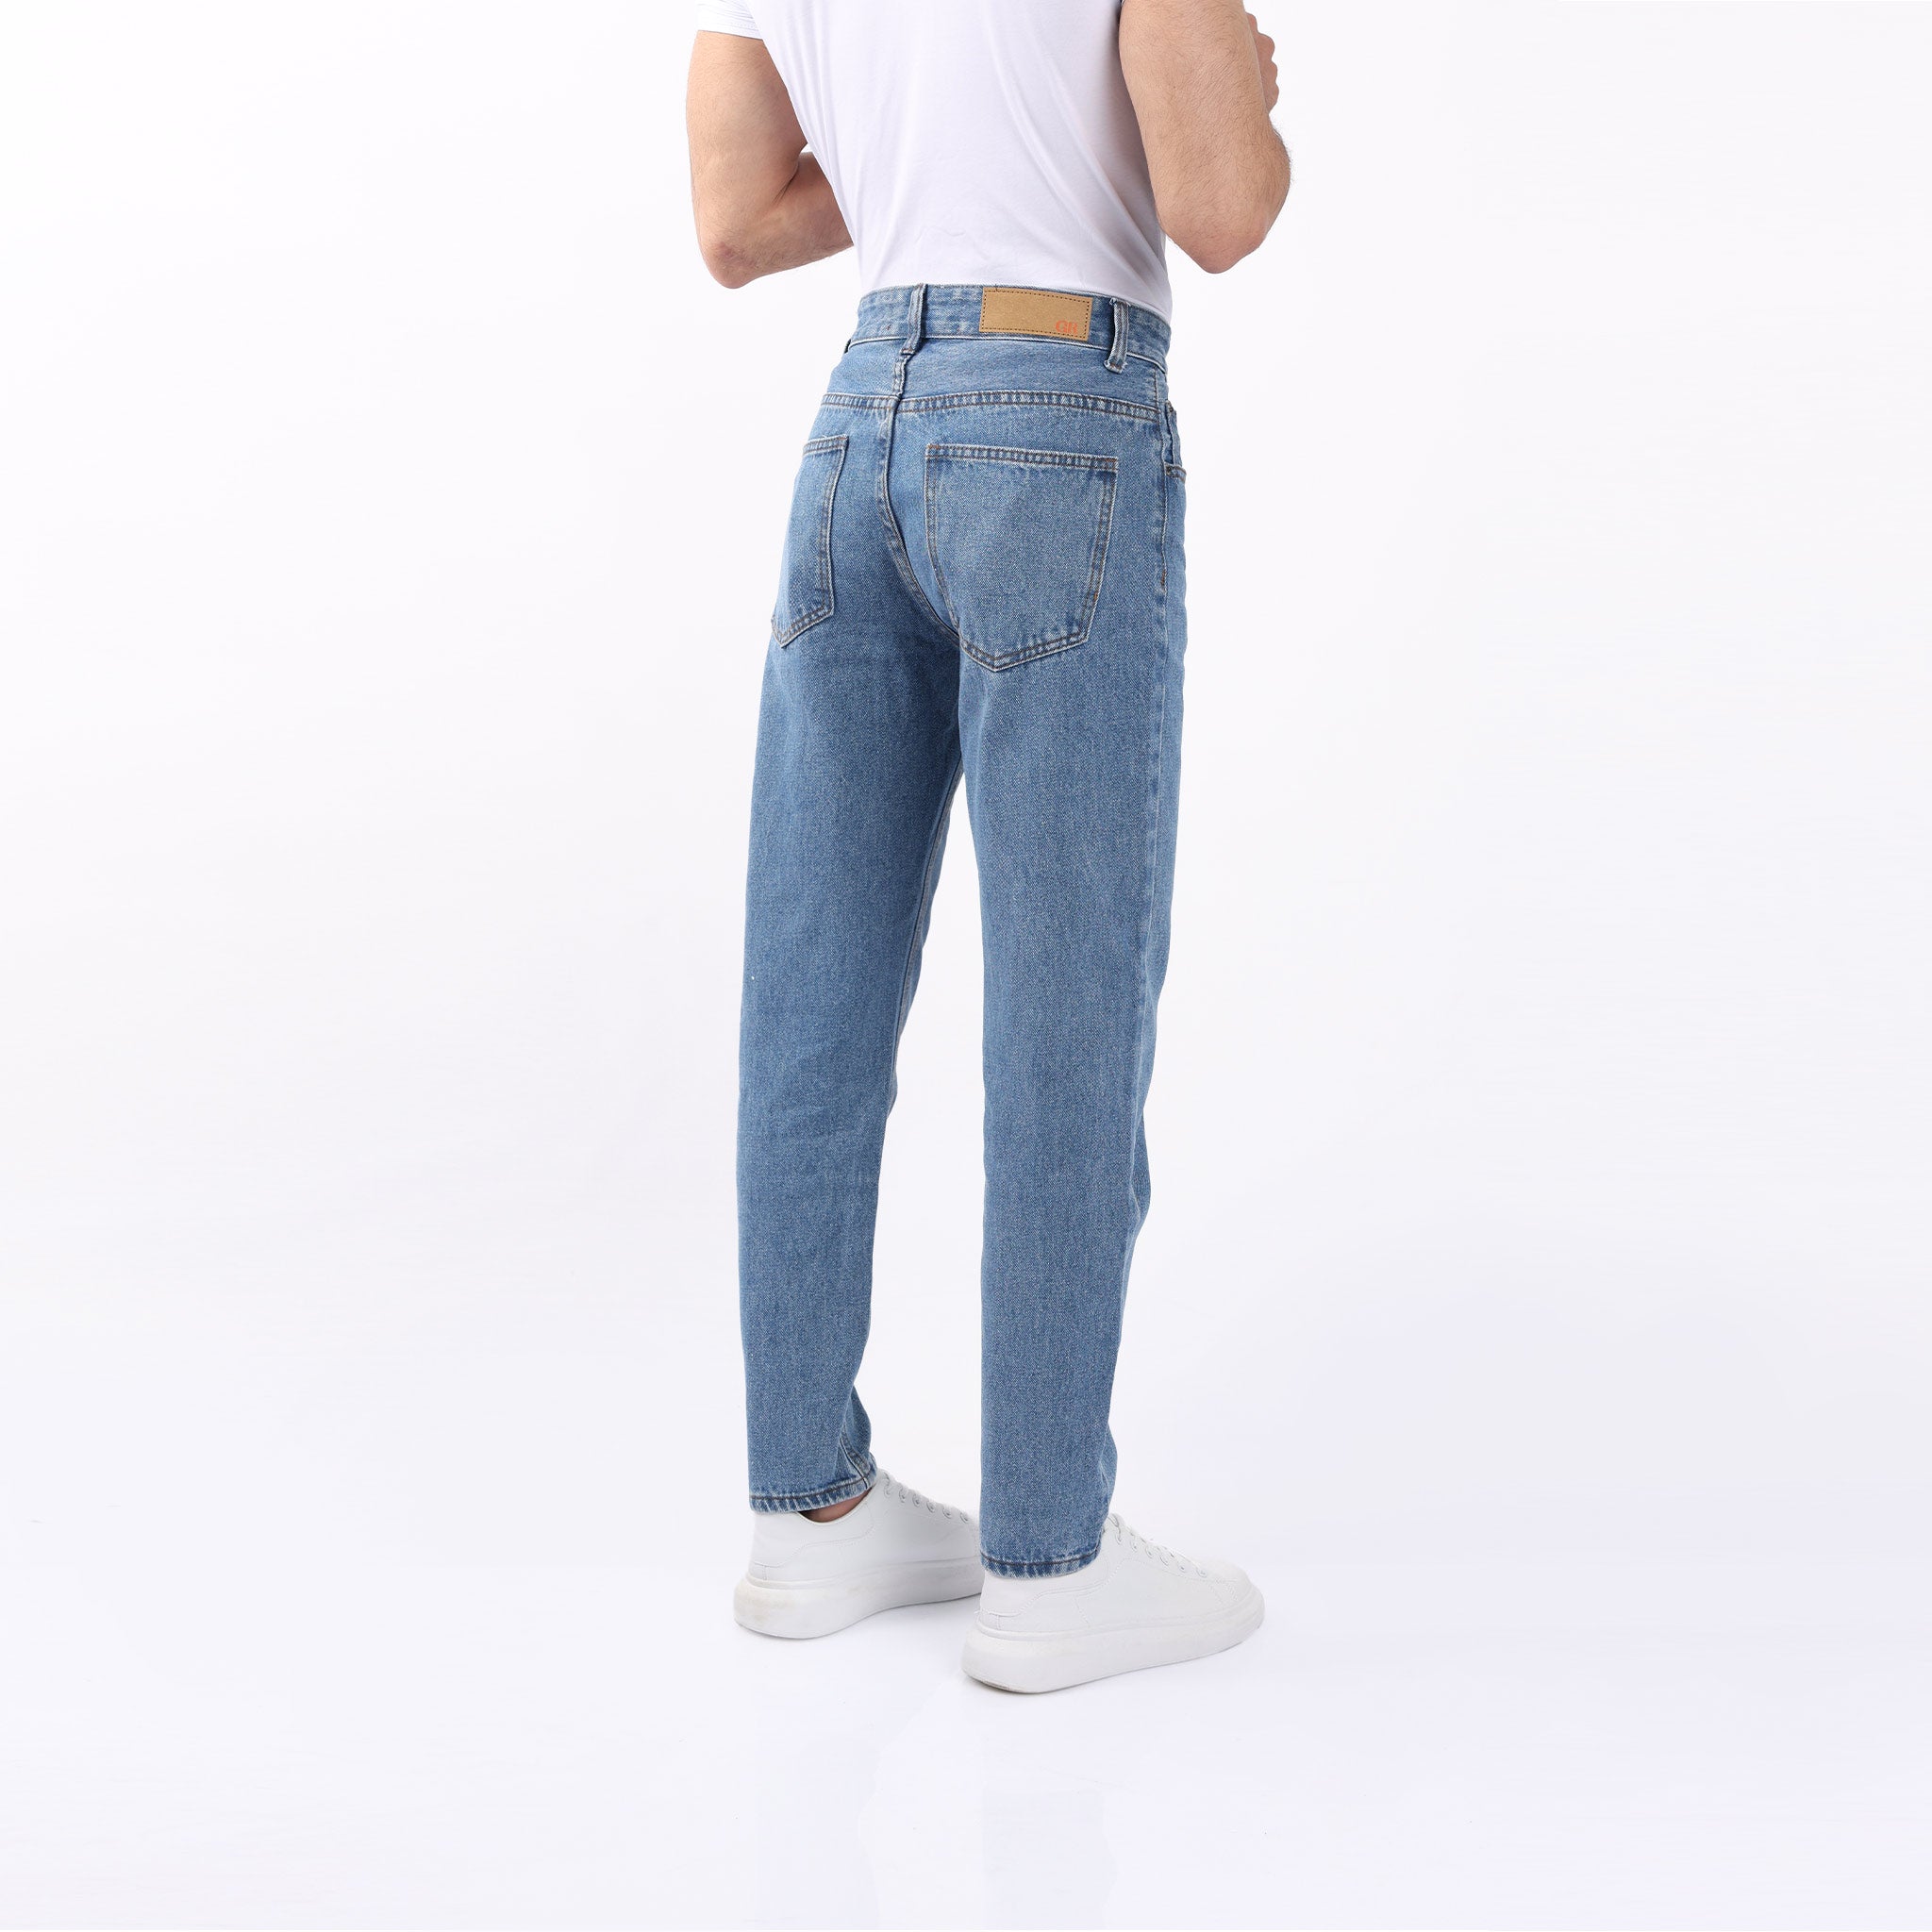 Boyfriend Jeans Pants